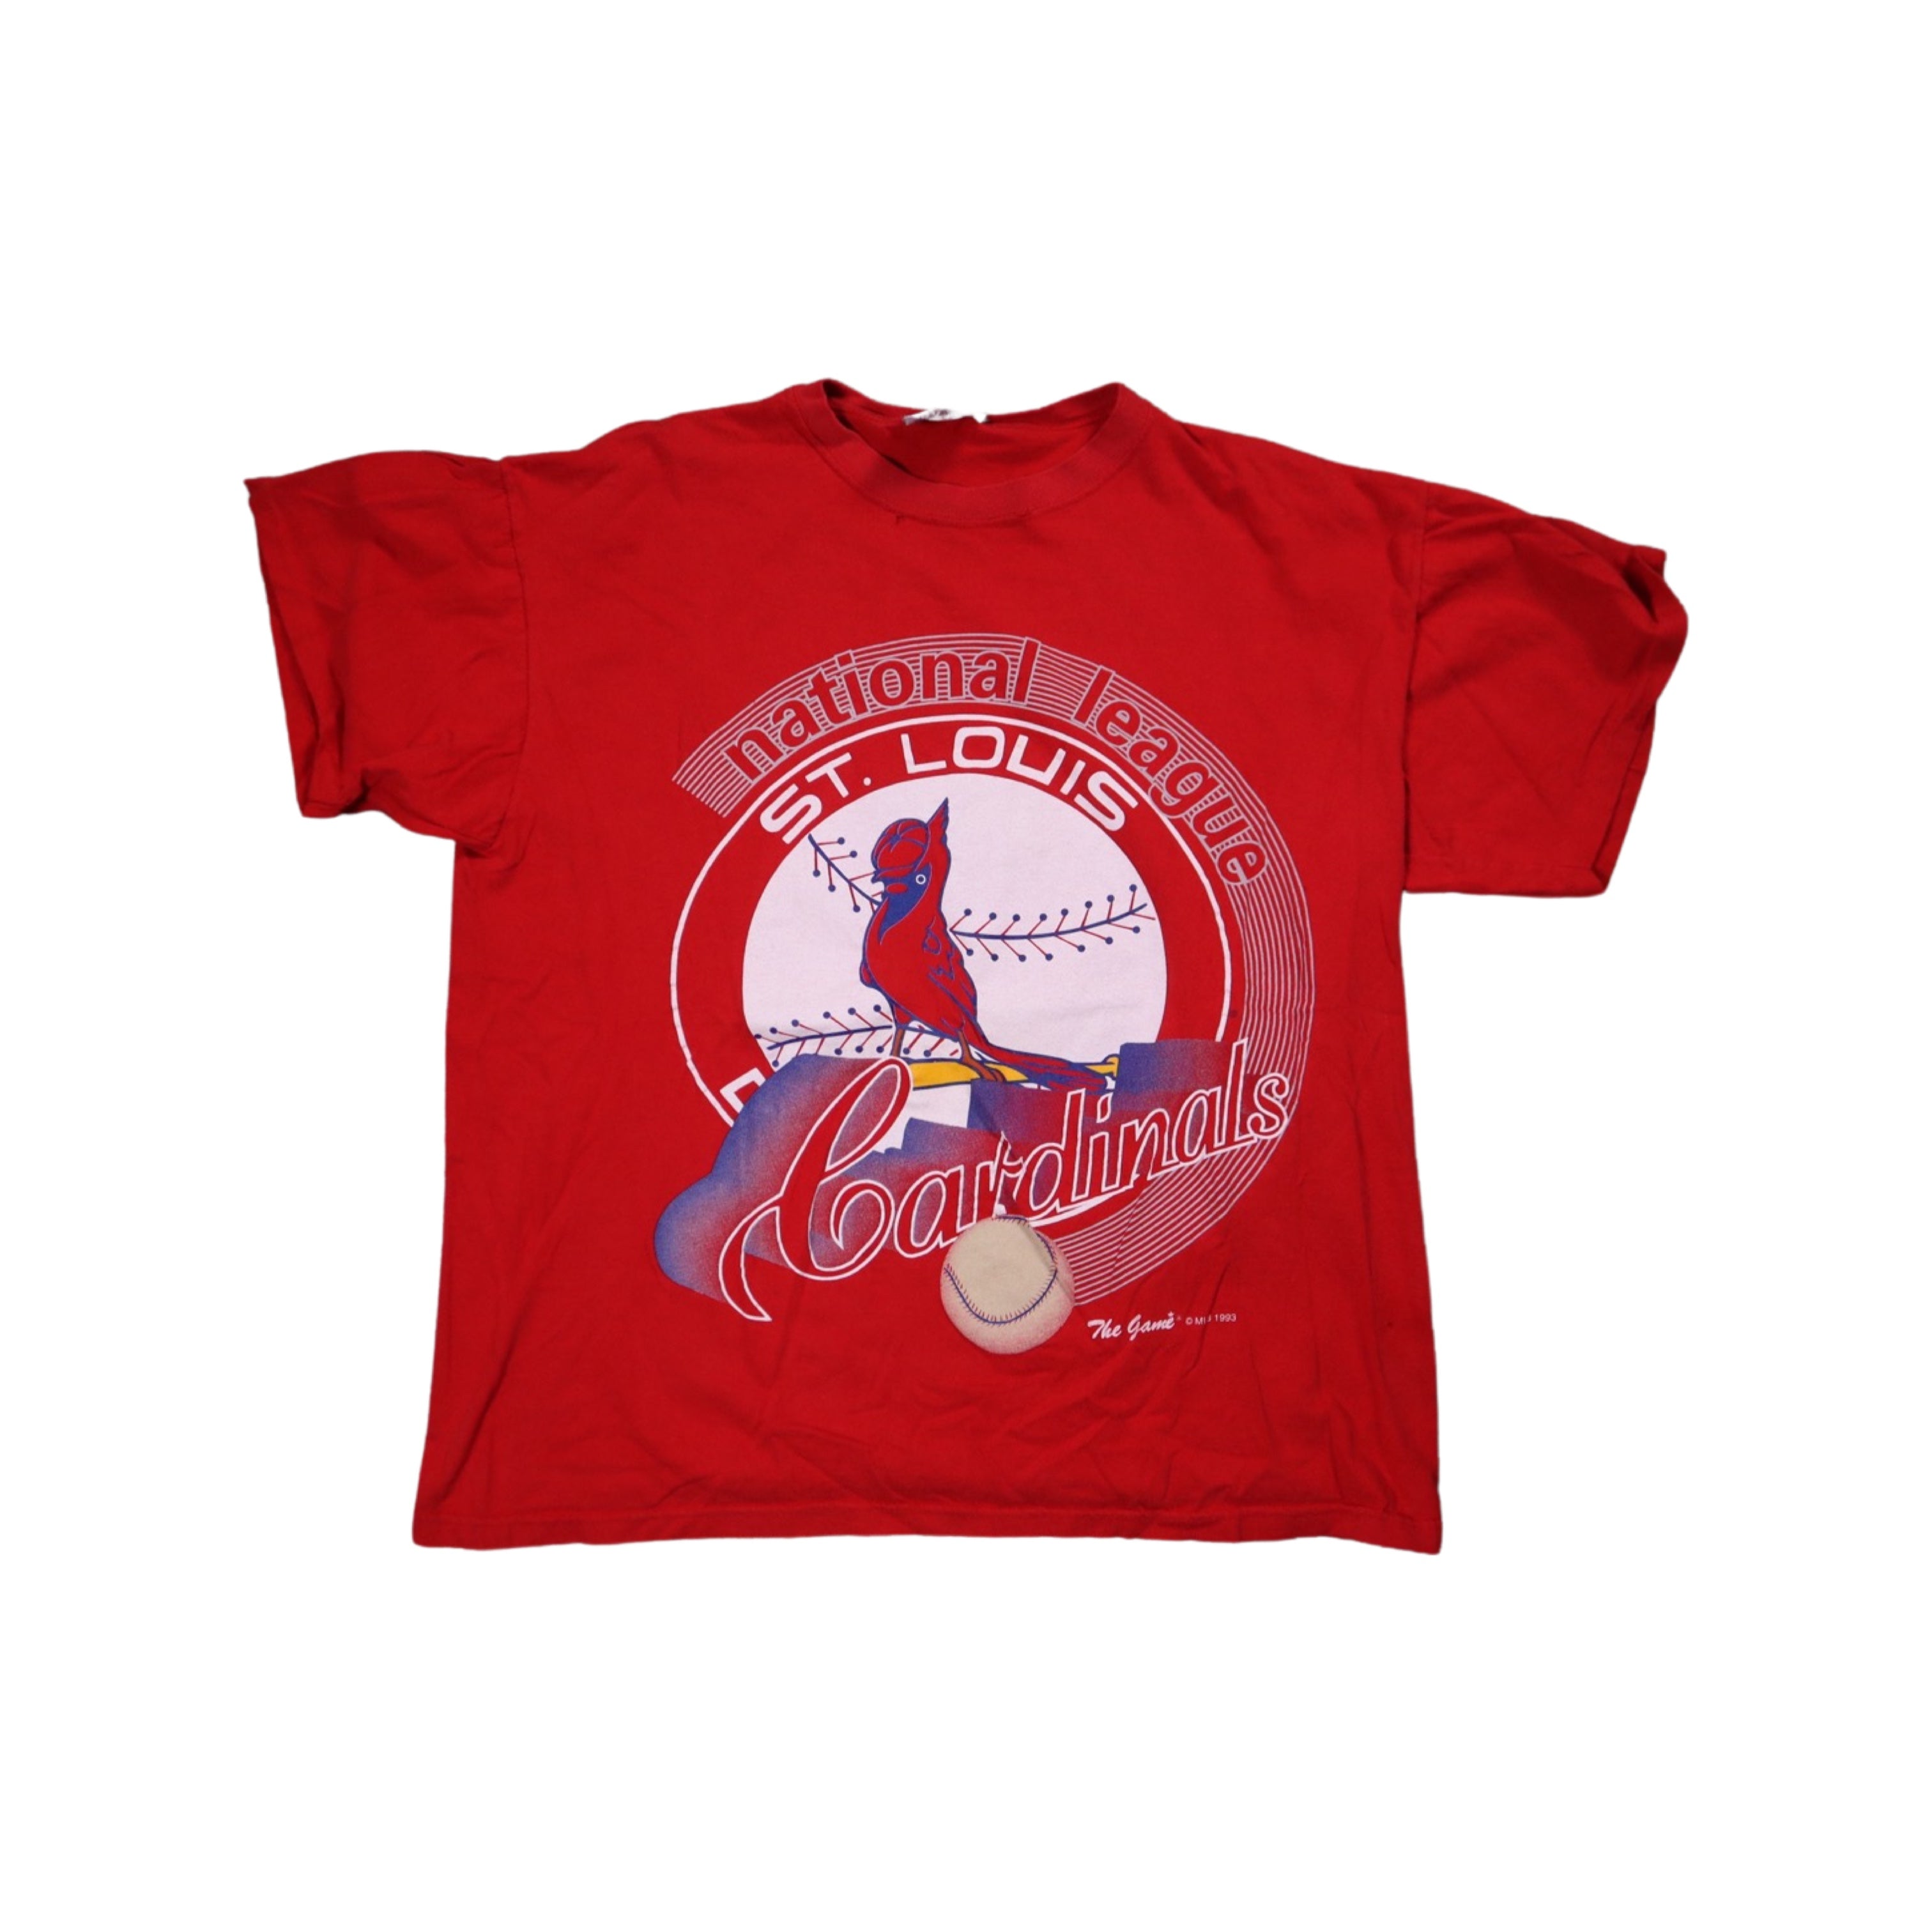 St. Louis Cardinals 1993 T-Shirt (Large)